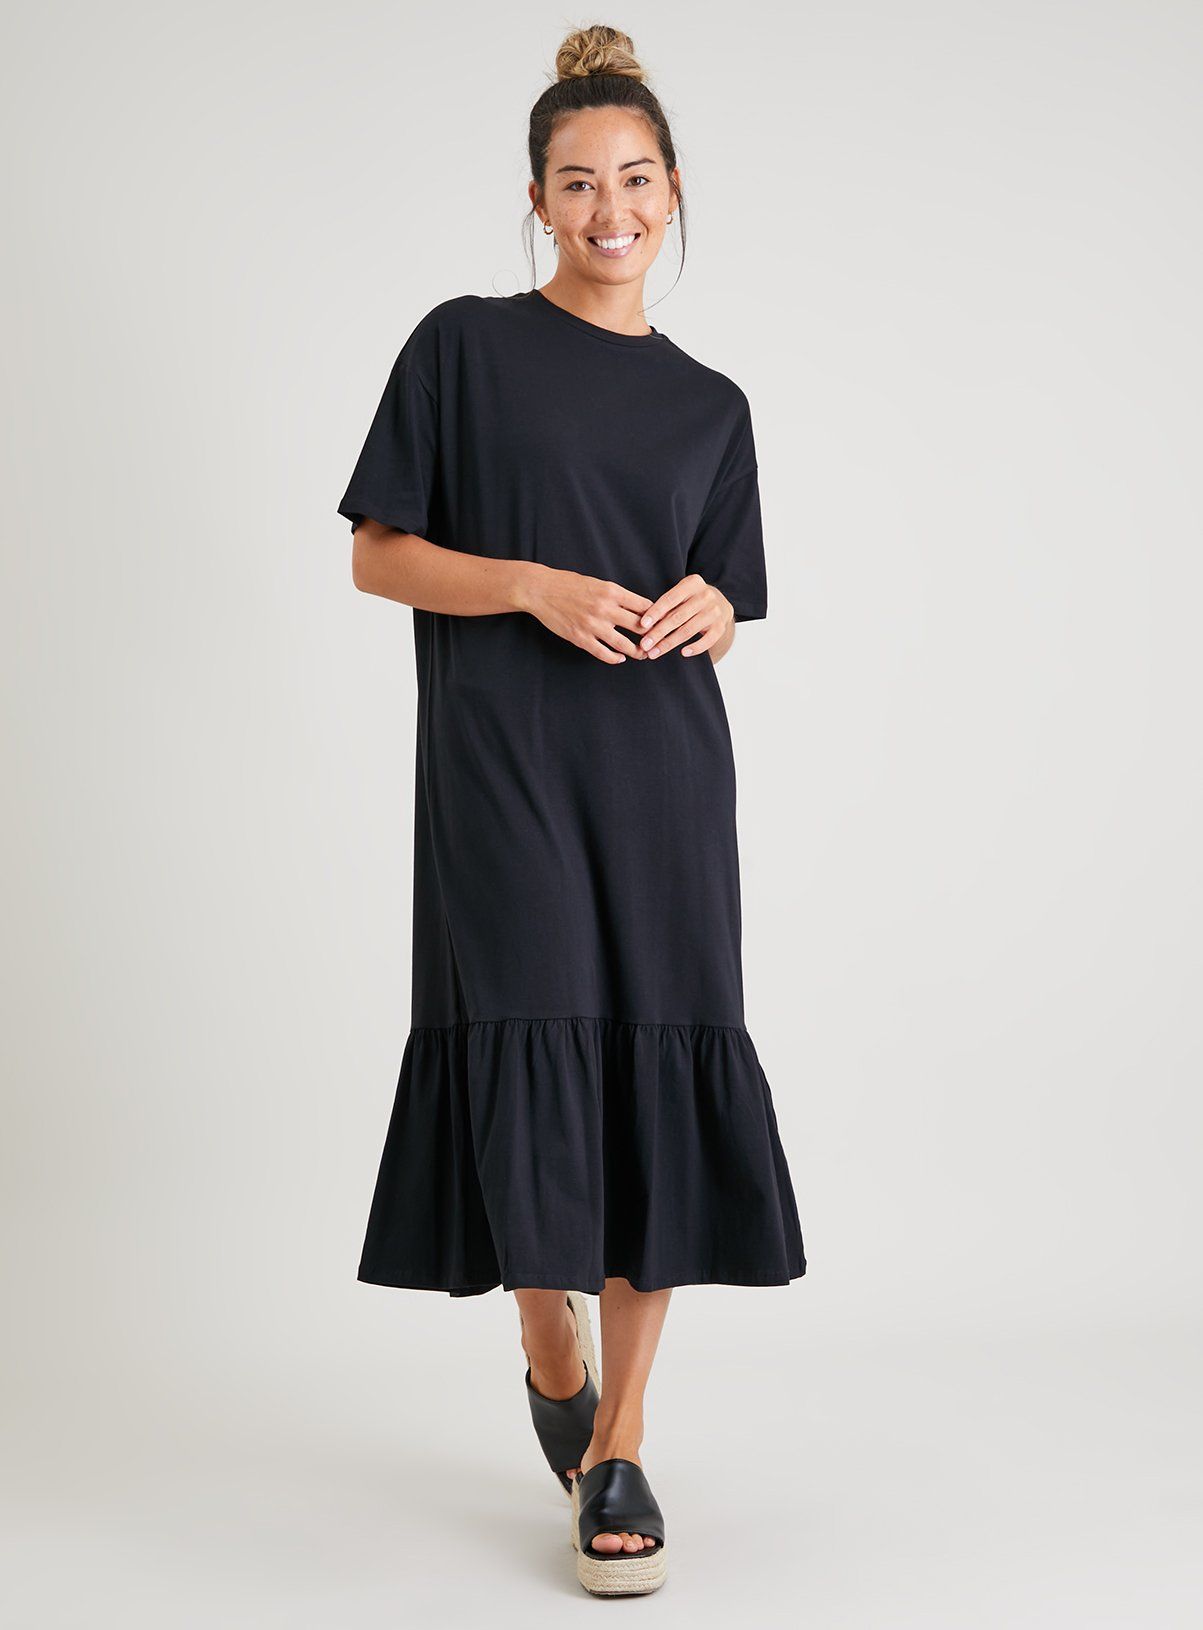 How to Wear Black Midi Dress